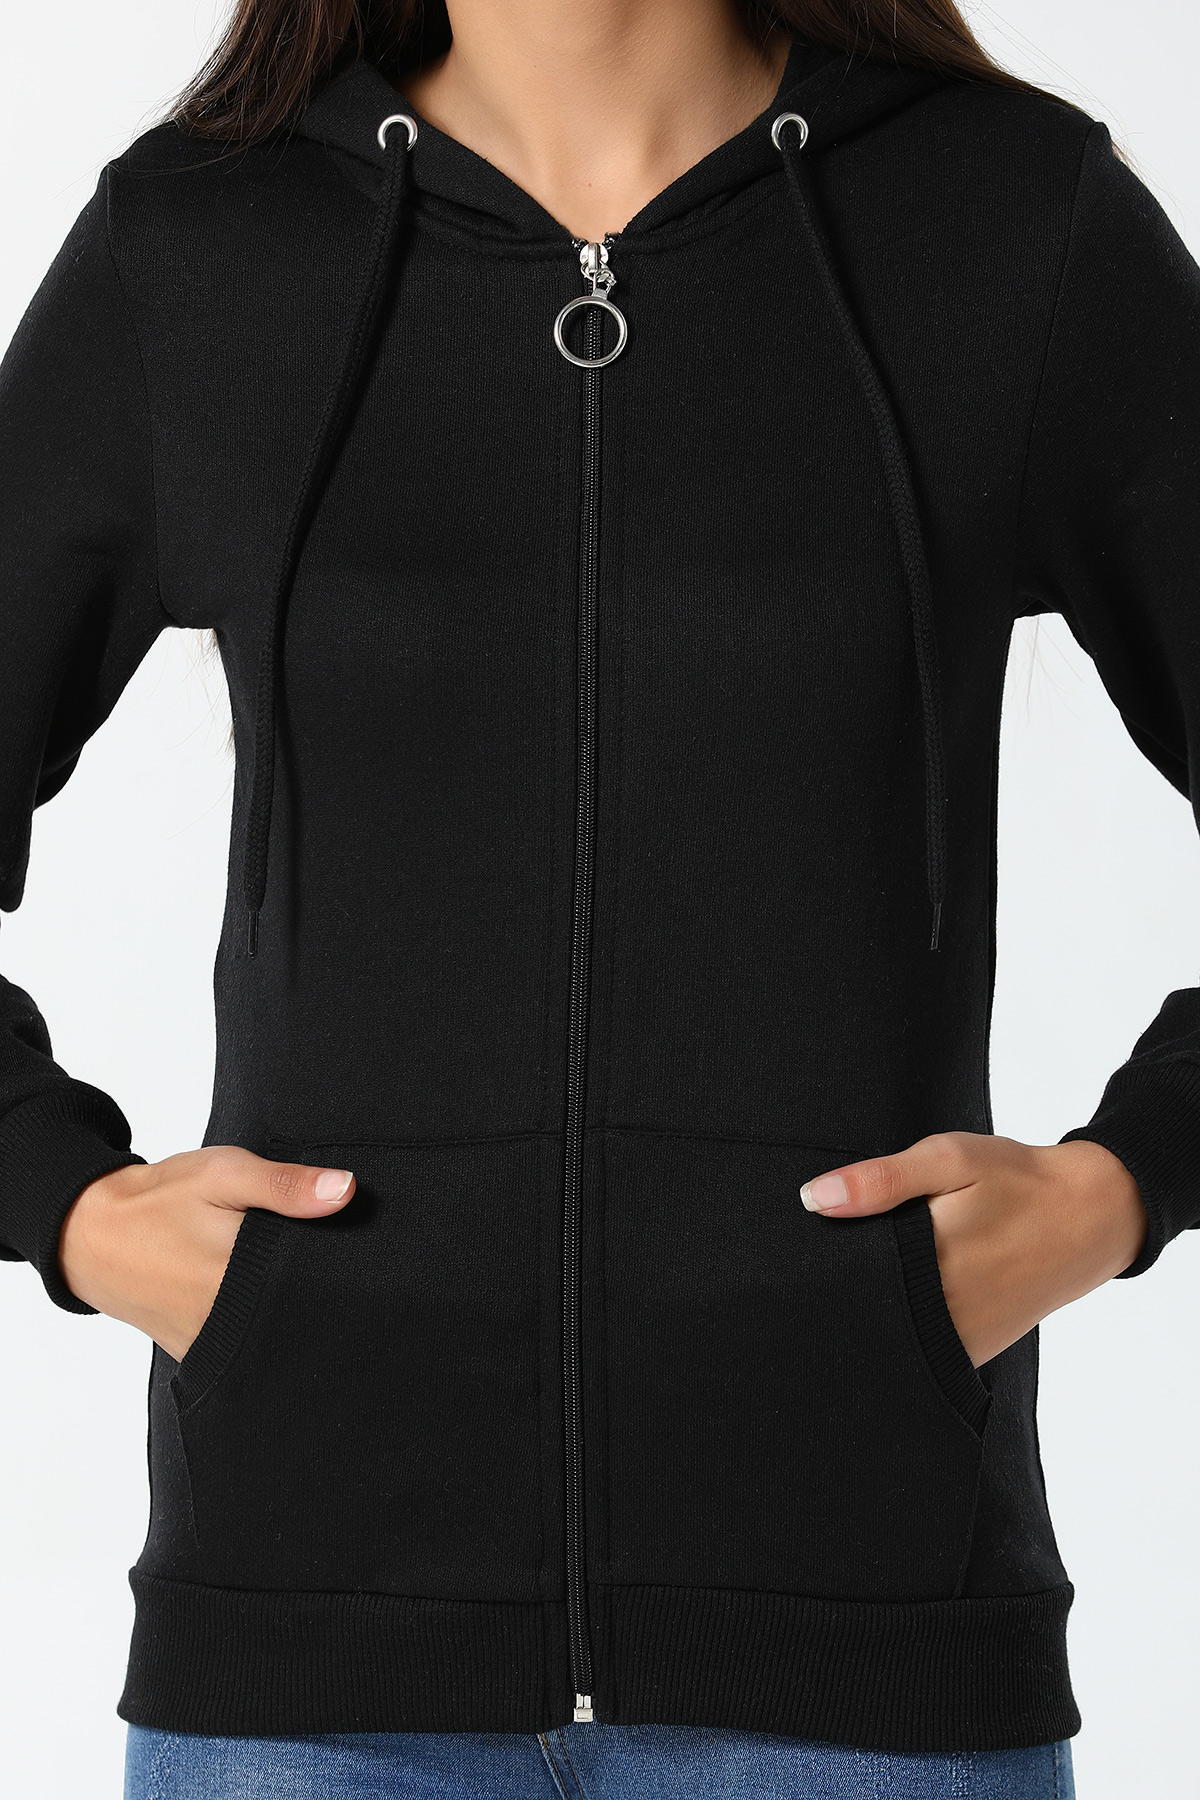 Siyah Kapüşonlu Fermuarlı Kadın Sweatshirt